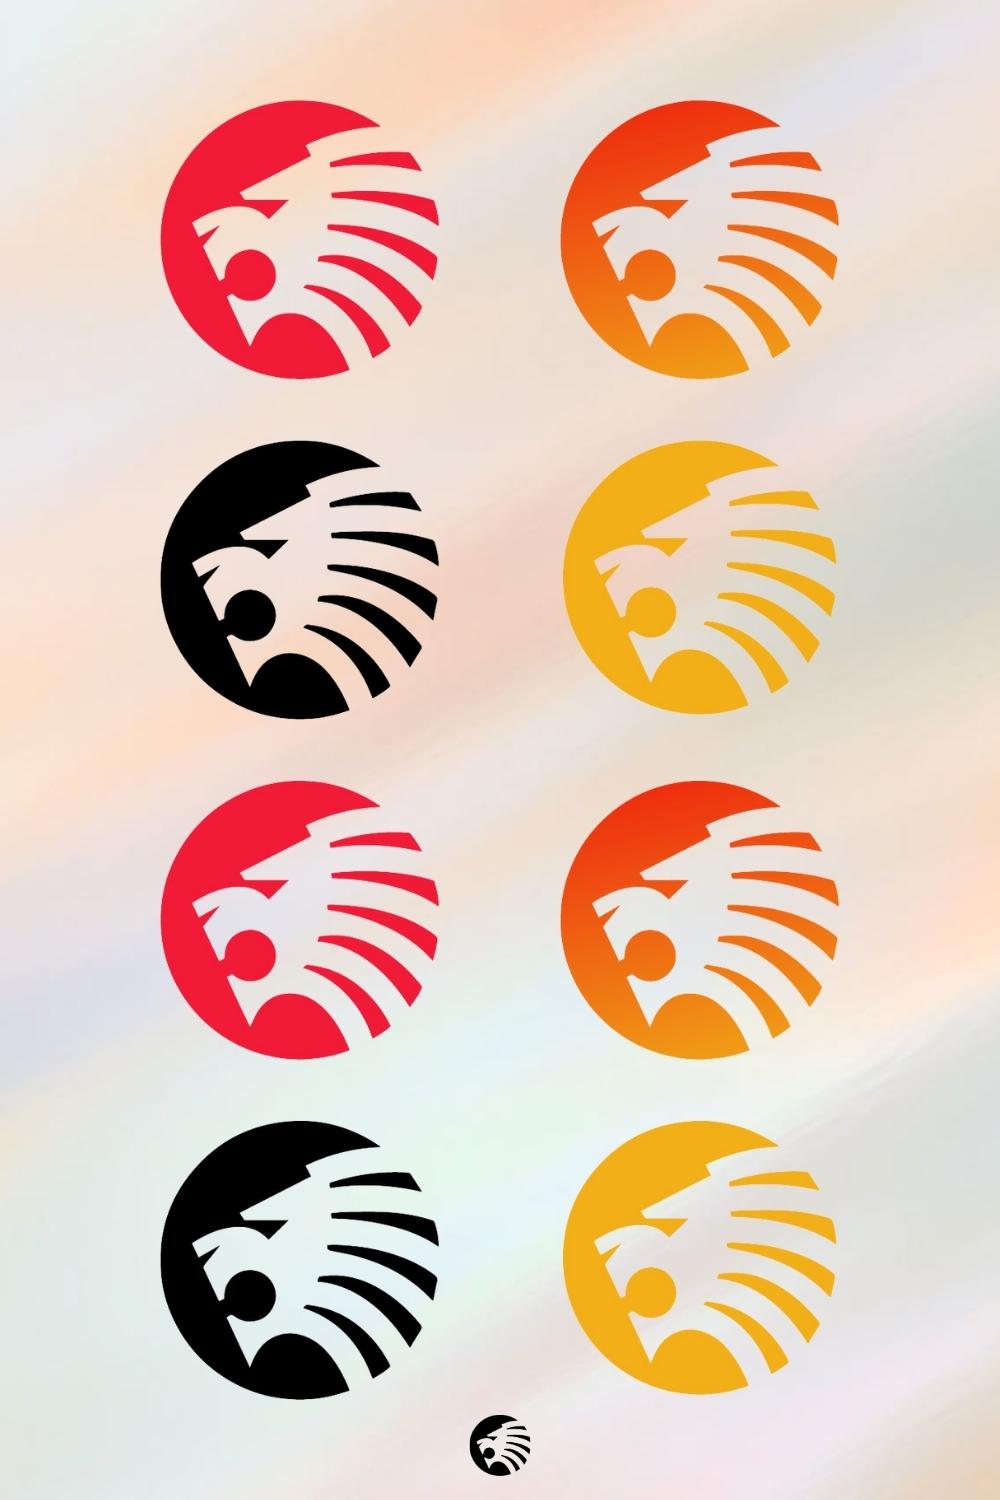 Lion logo design (business logo) pinterest preview image.